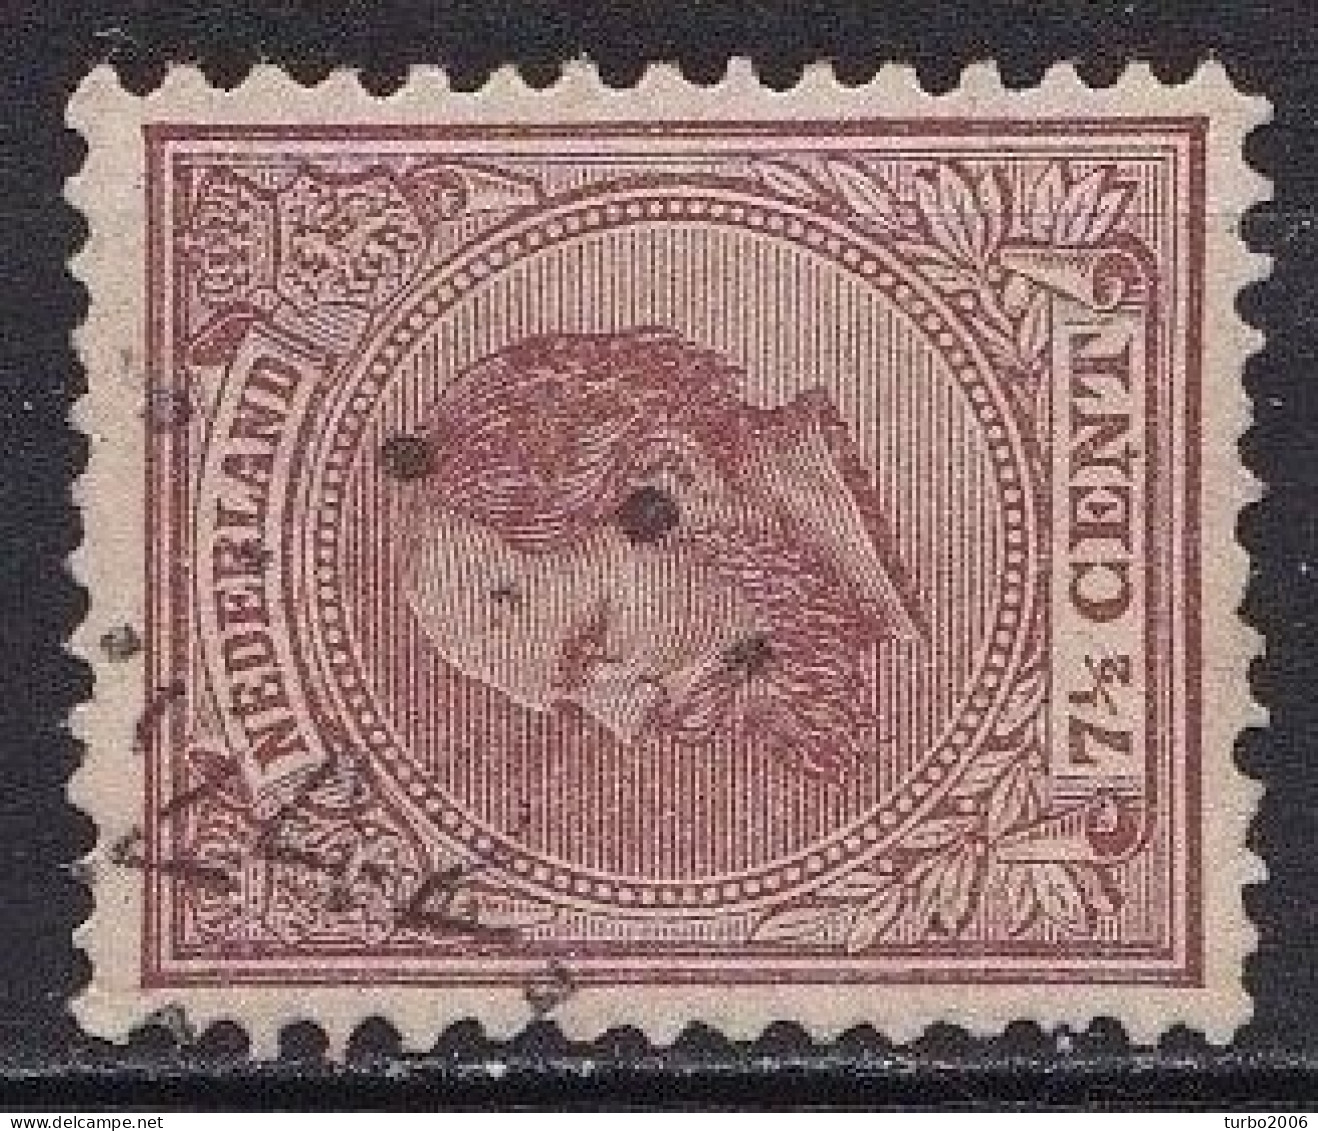 1872 Puntstempel 242 (Bussum) Op Koning Willem III  7½ Cent Bruin NVPH 20 - Postal History